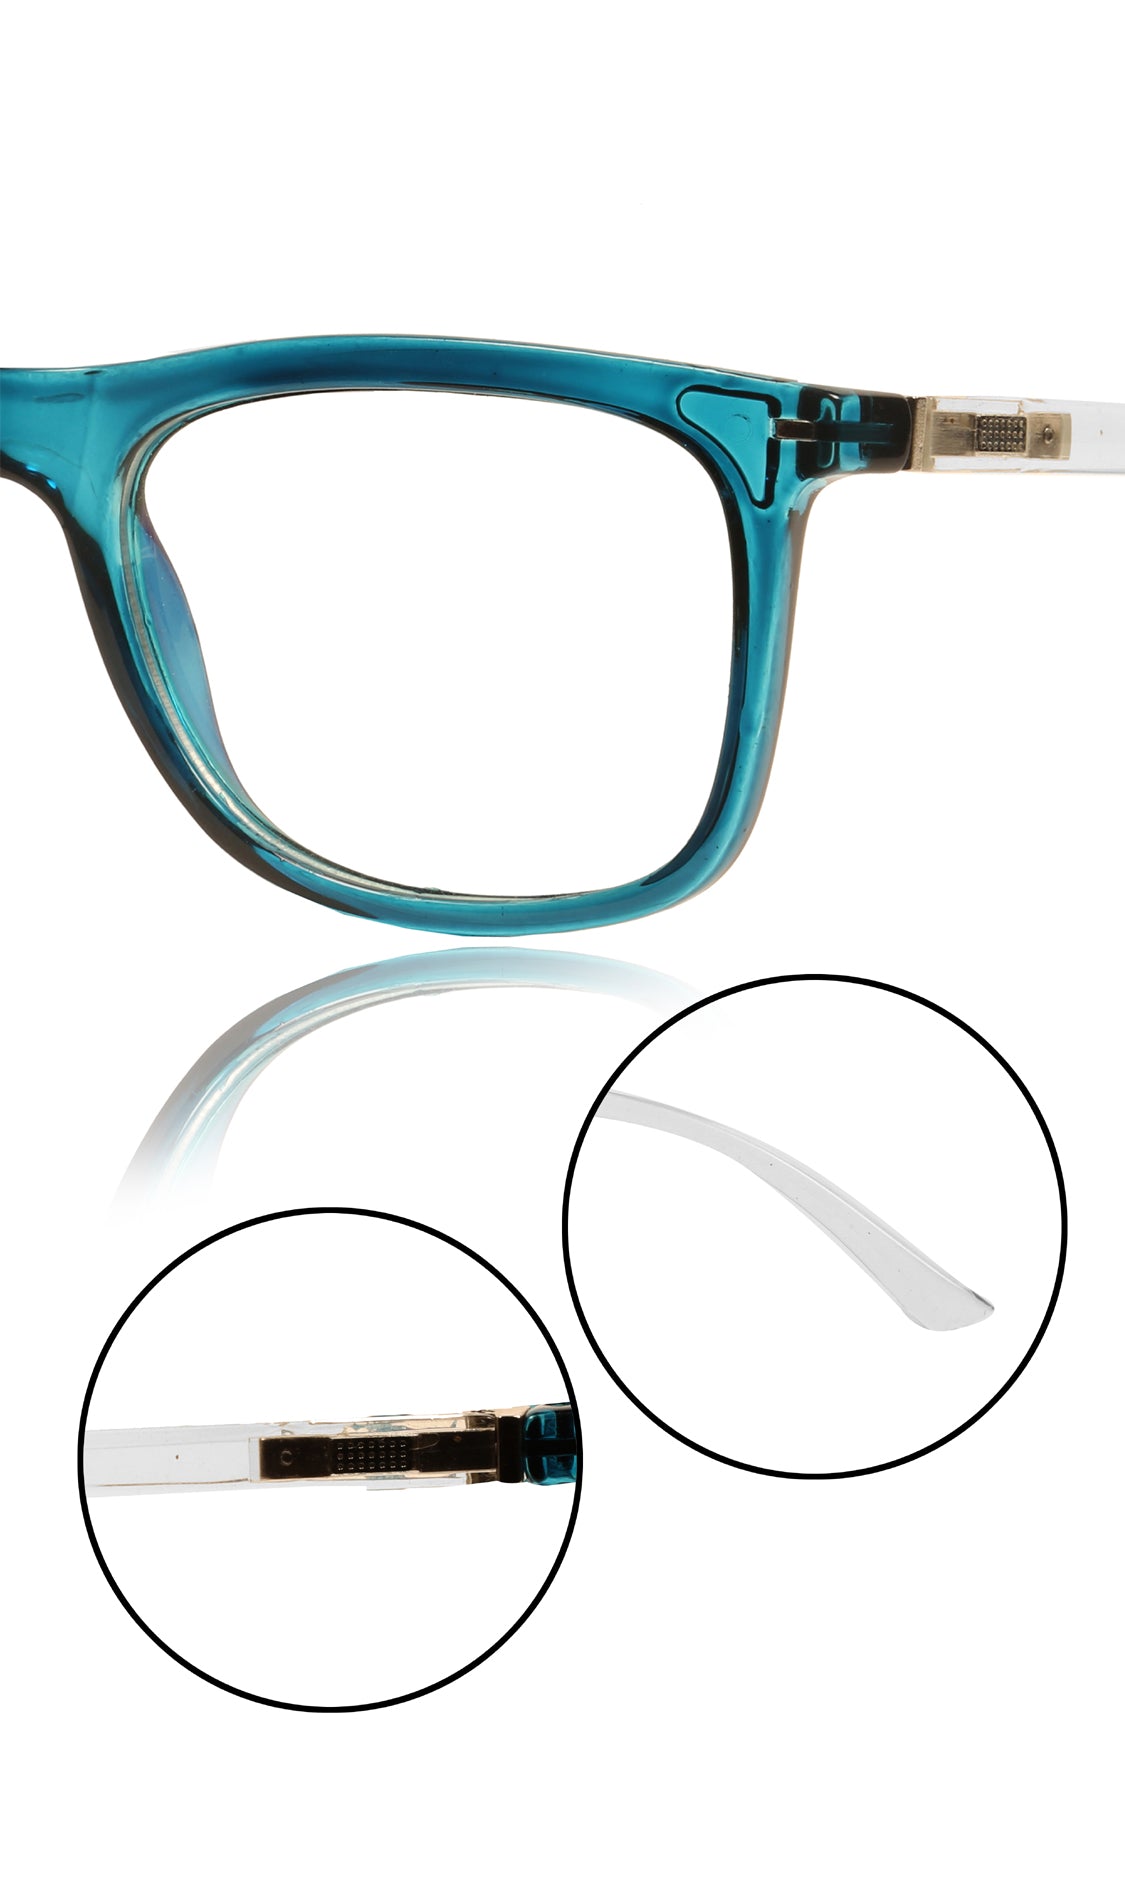 Jodykoes® Colour Frame Series Eyewears | Blue Rays Protection Warfare Stylish Spectacles With Anti Glare Eyeglasses For Men and Women Eyewears (Turquoise Blue) - Jodykoes ®